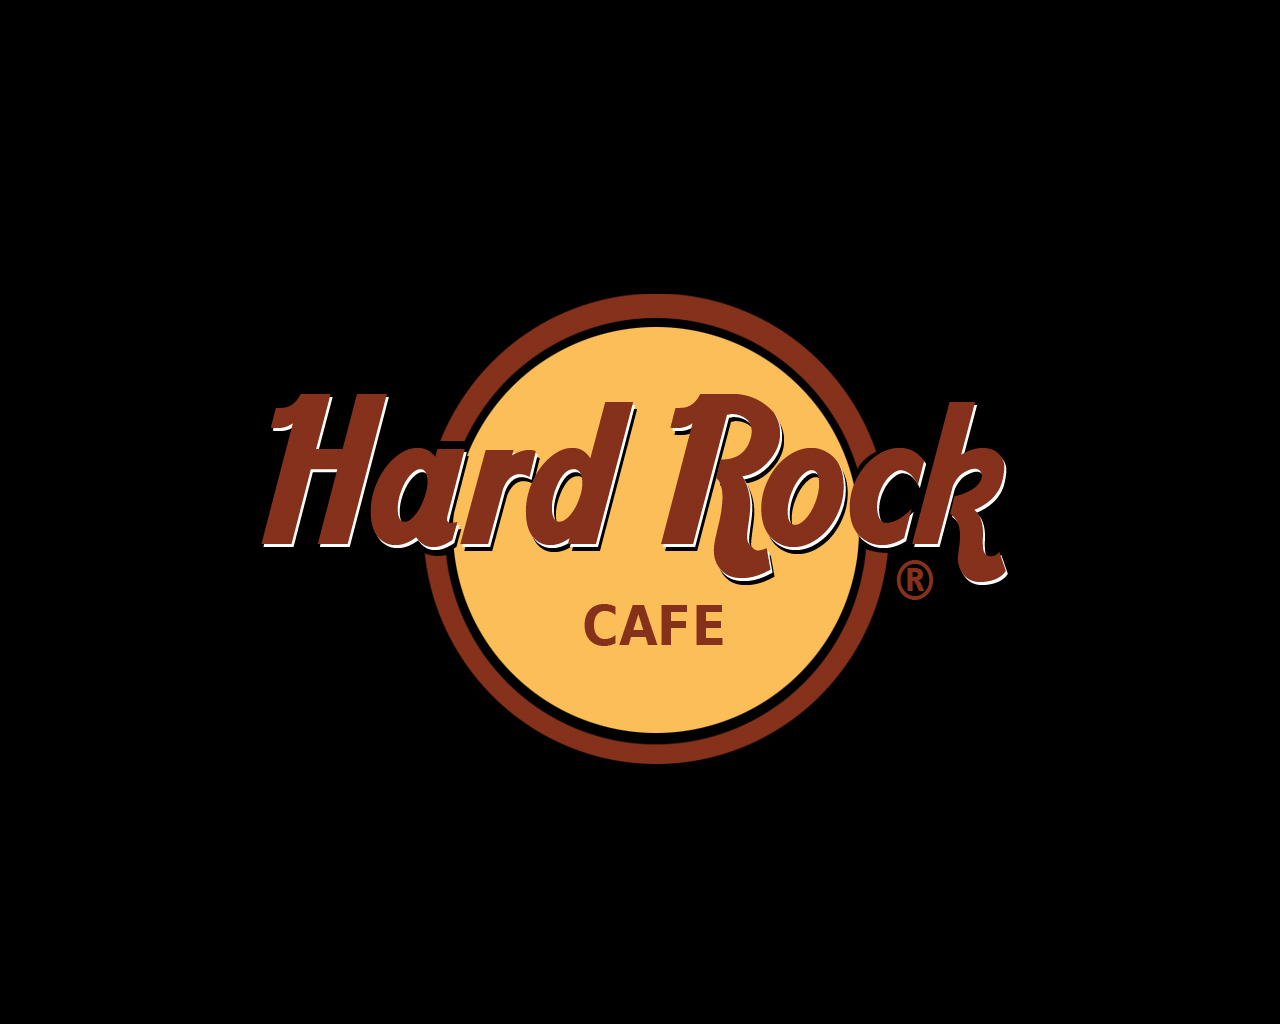 Hard Rock Cafe Black Edition By Icebrain